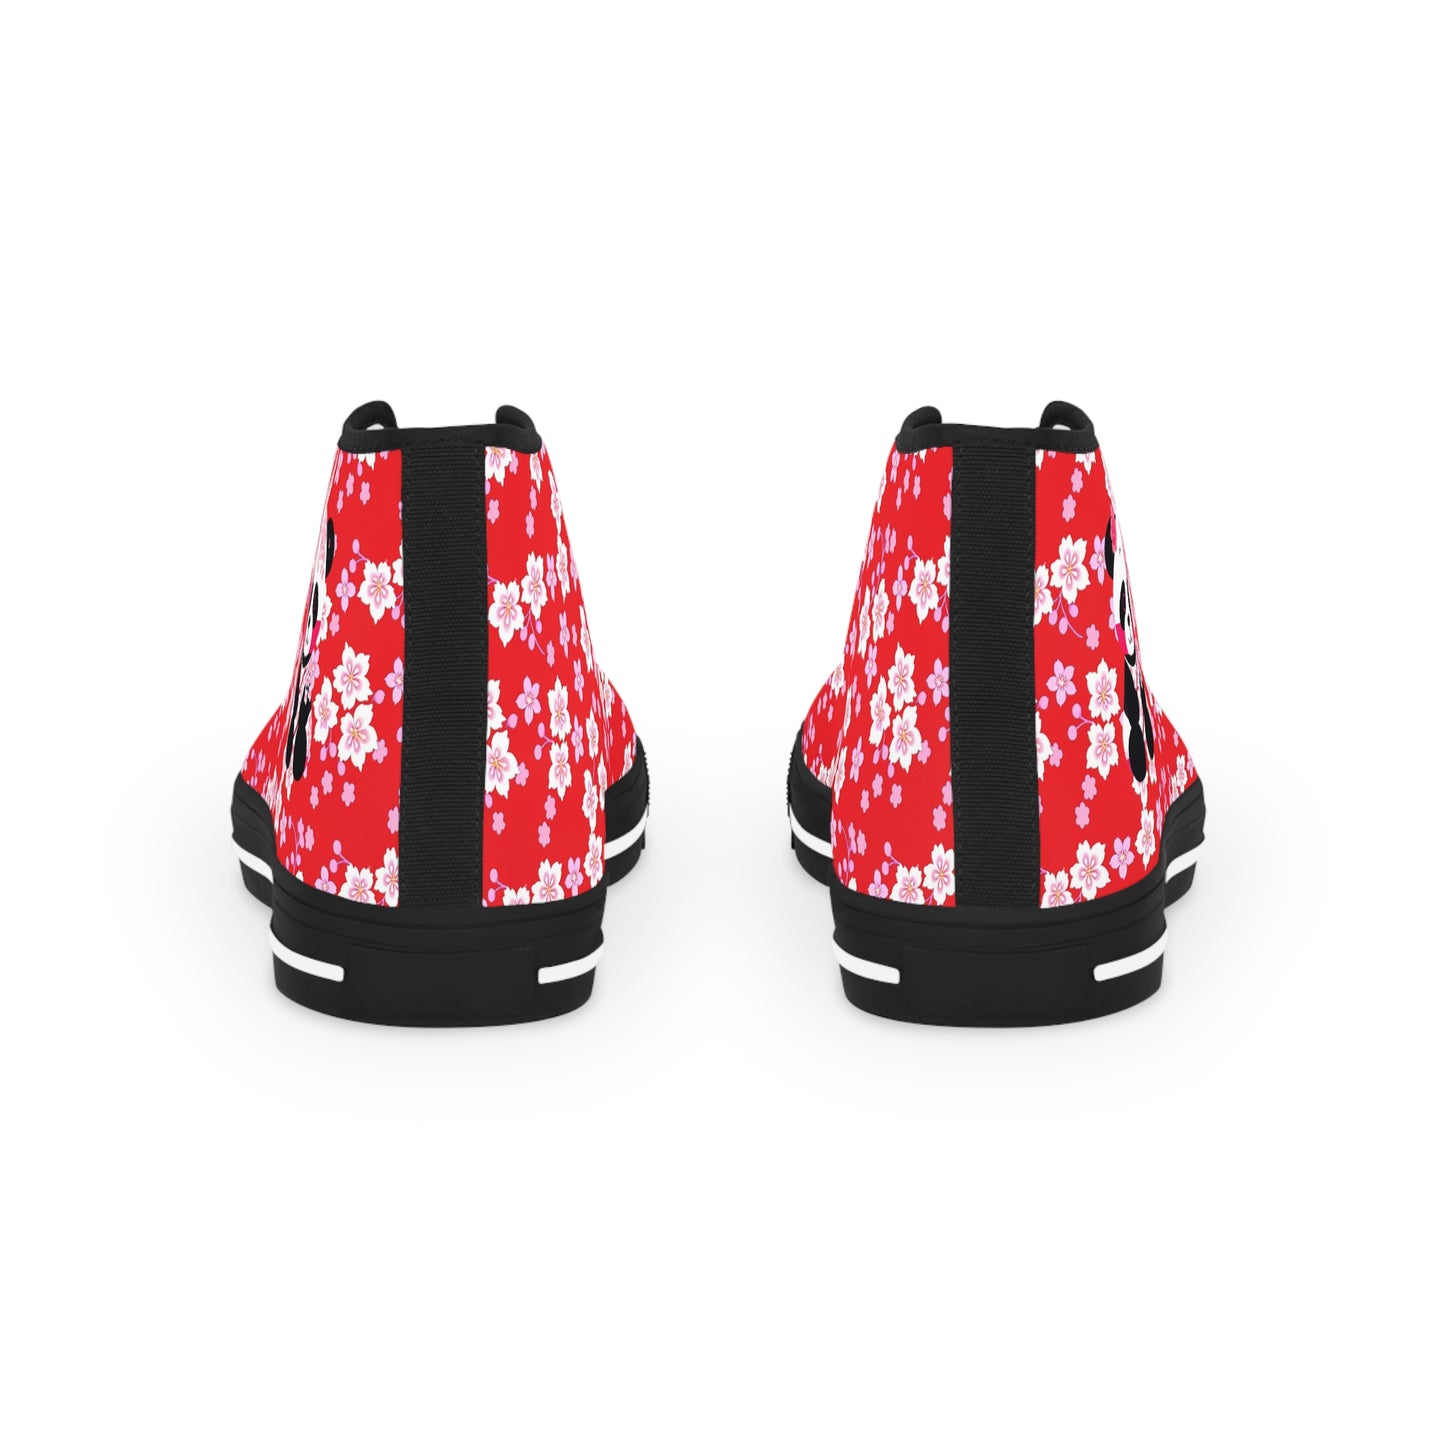 Cherry Blossom Panda Crimson High Top Sneakers